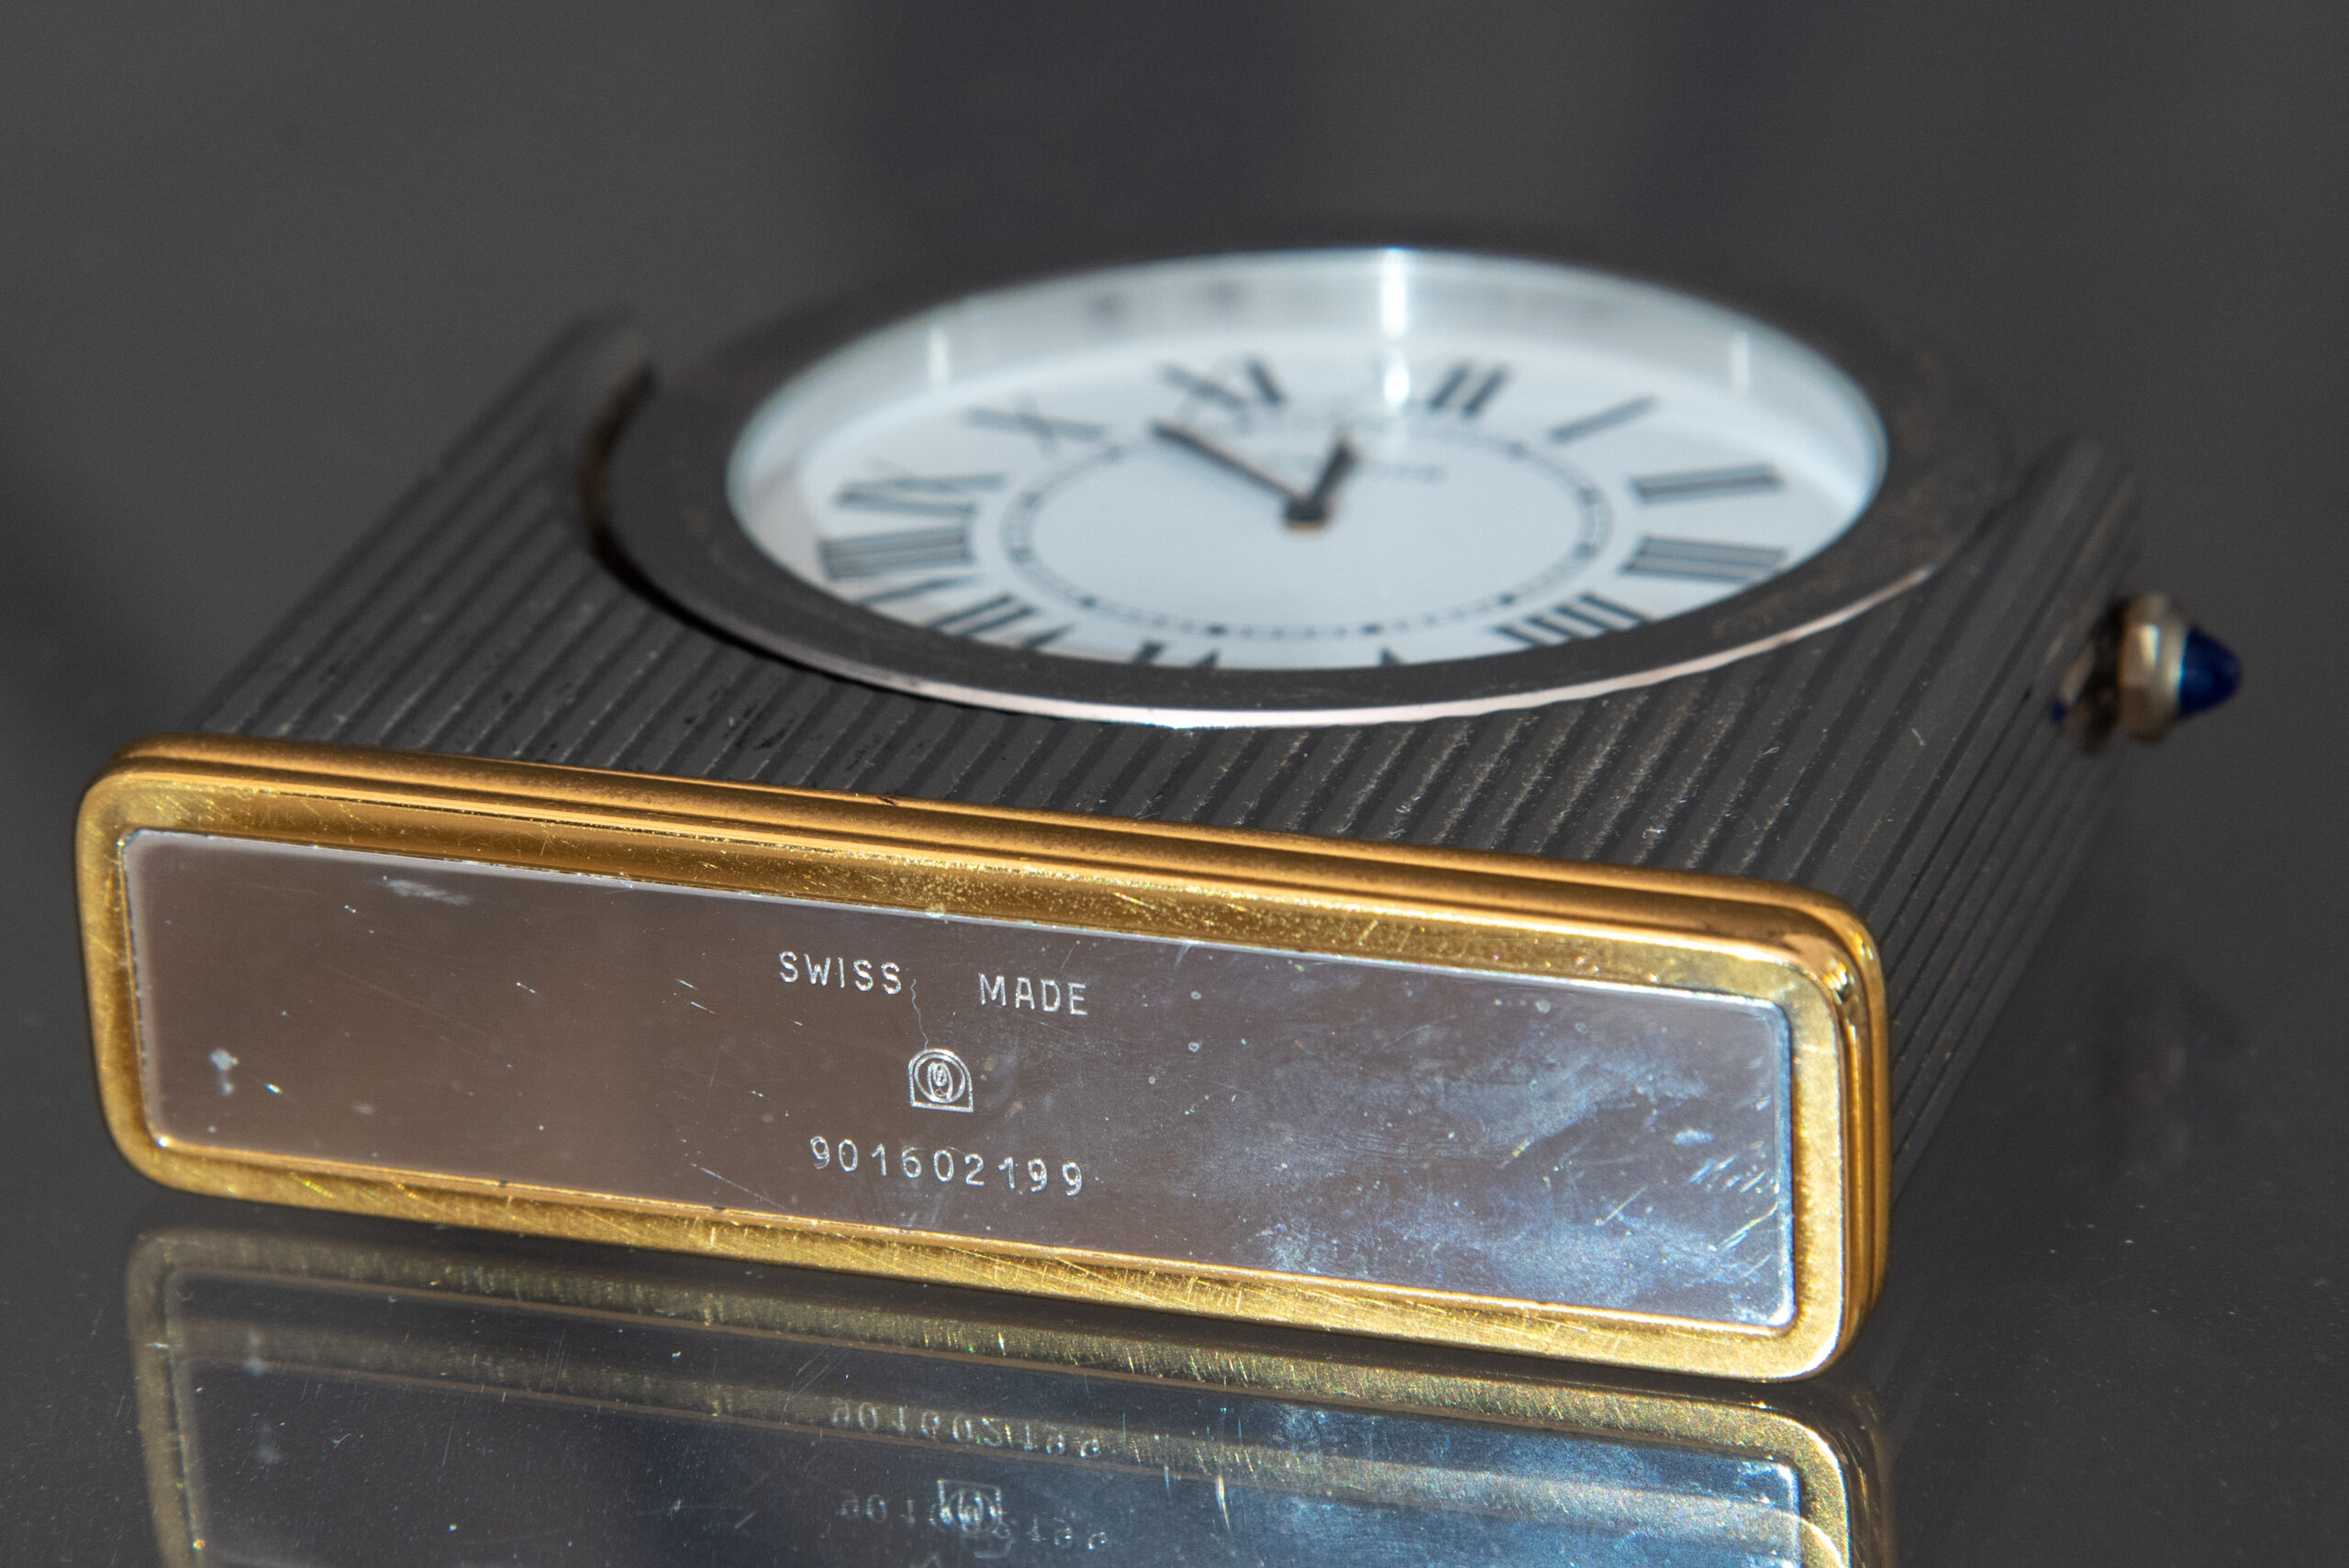 vintage cartier clocks